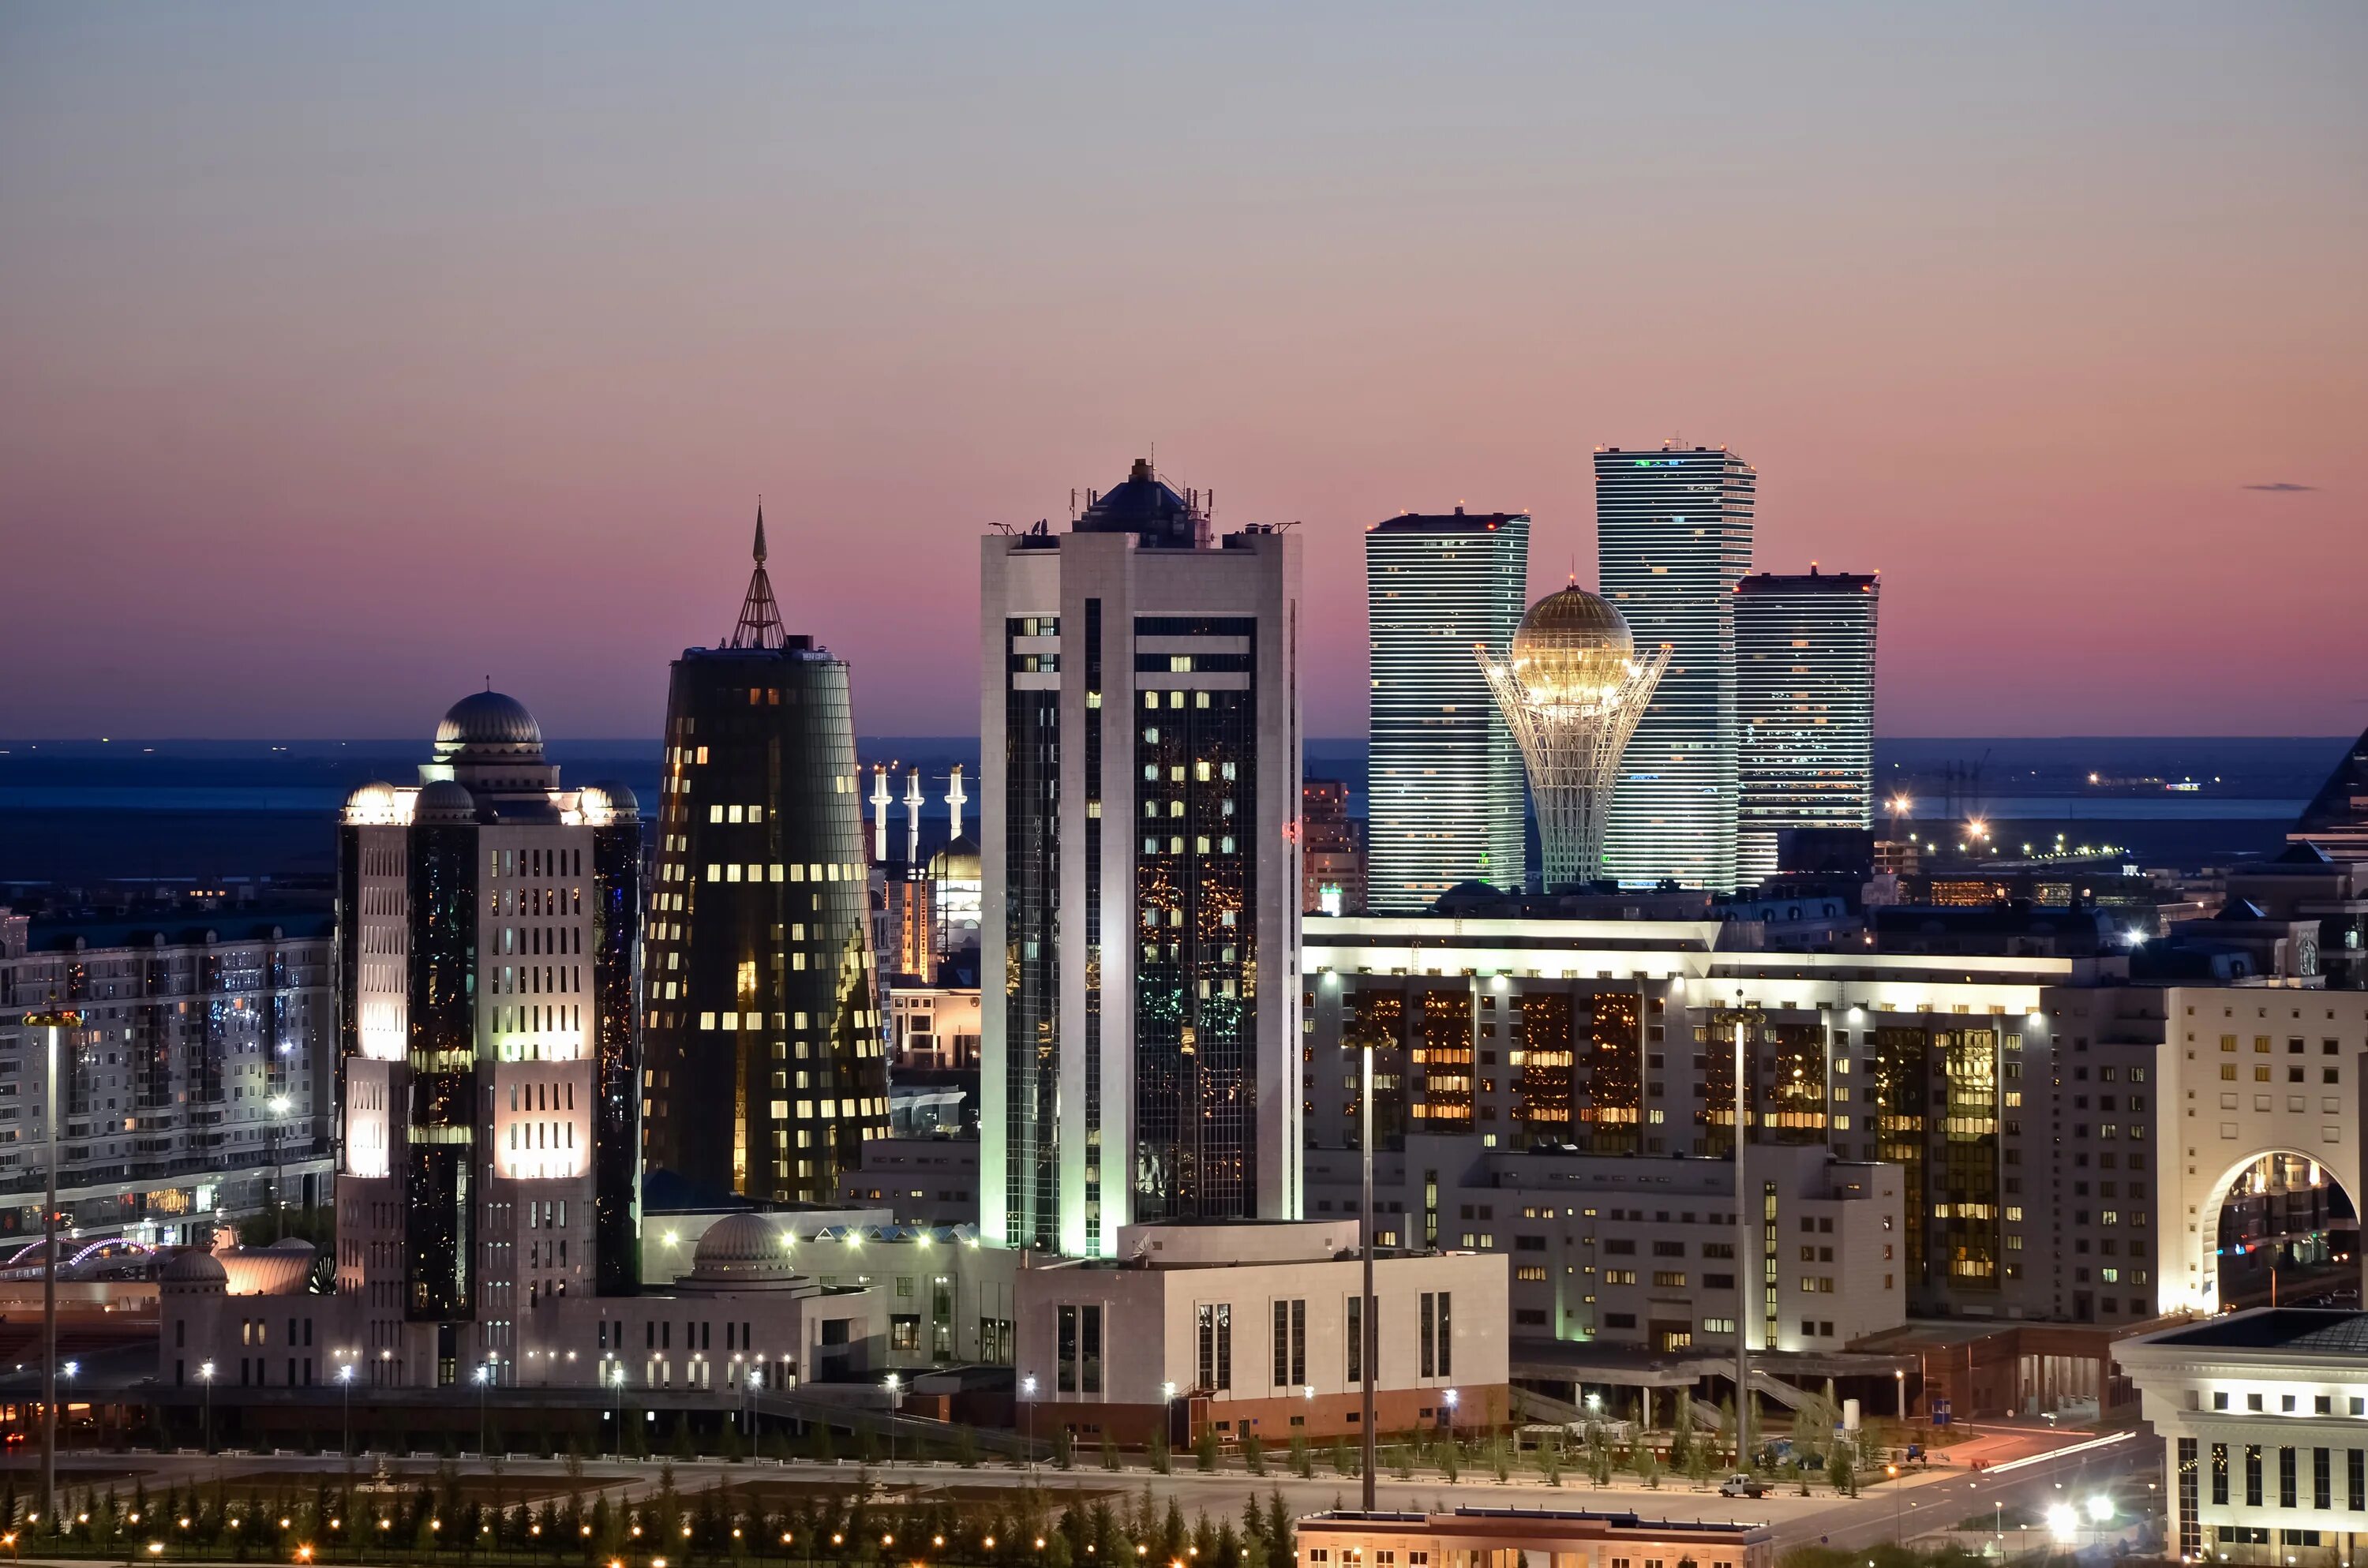 Астана, Astana. Нурсултан столица Казахстана. Нурсултан Алма Ата. Сталинская высотка в Астане. Астана свет